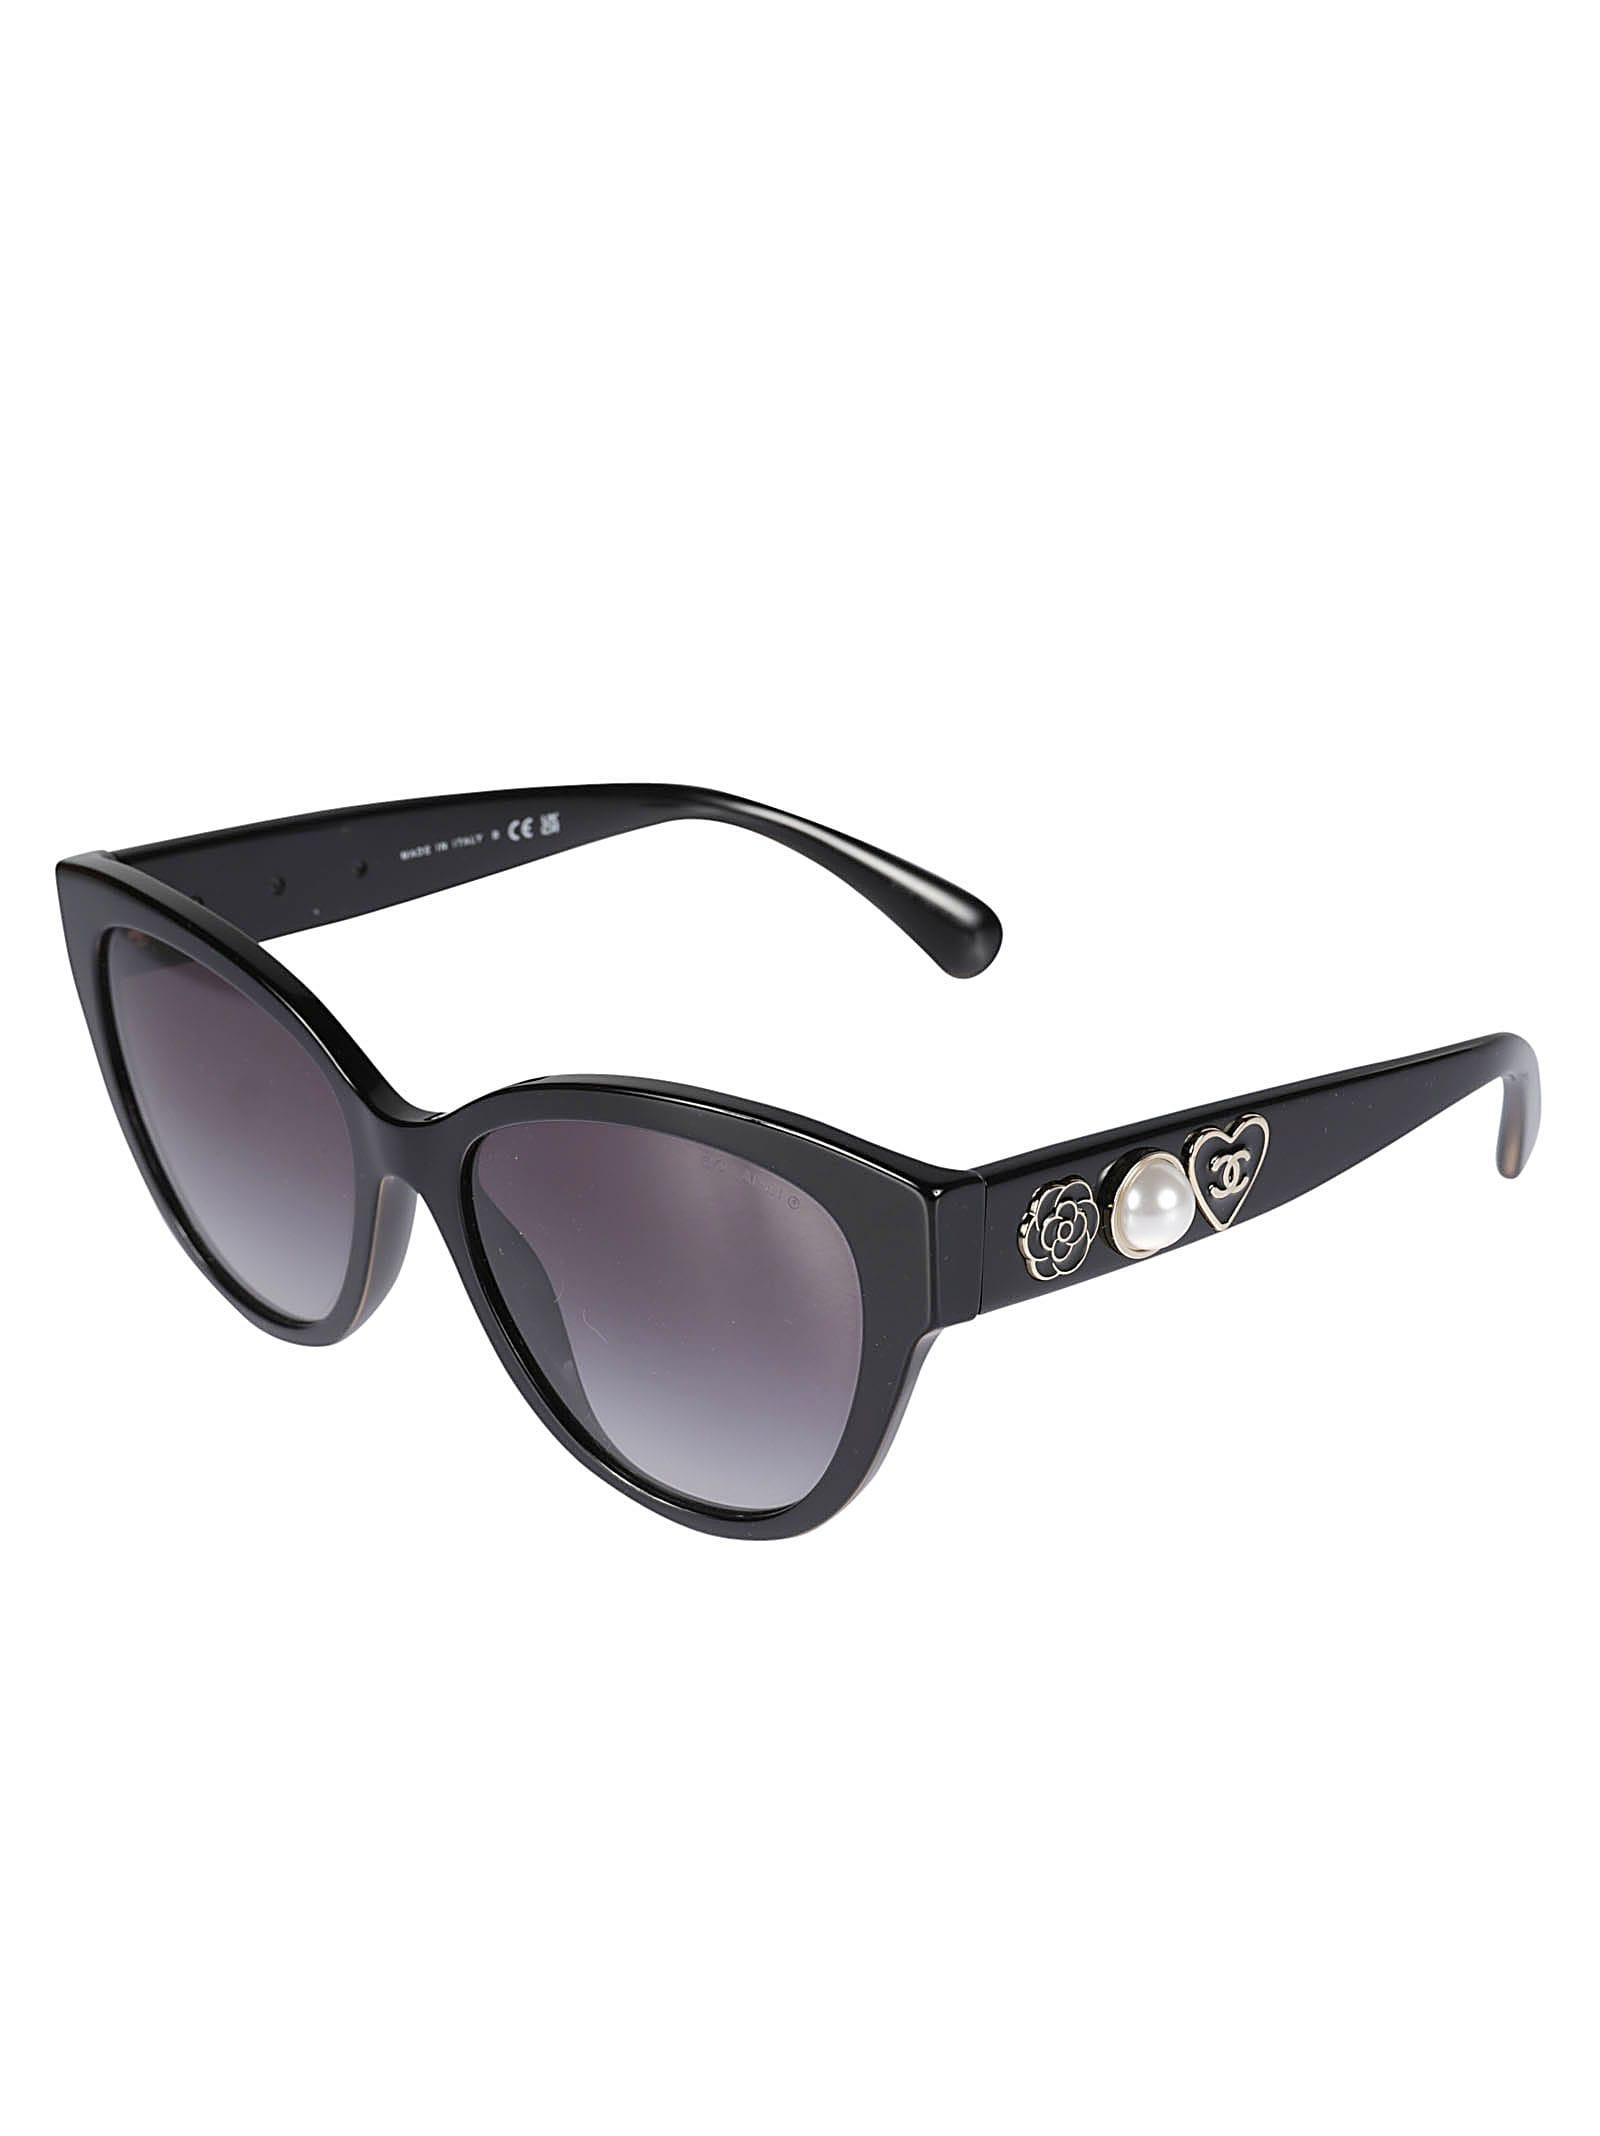 Discover 251+ chanel camellia sunglasses best